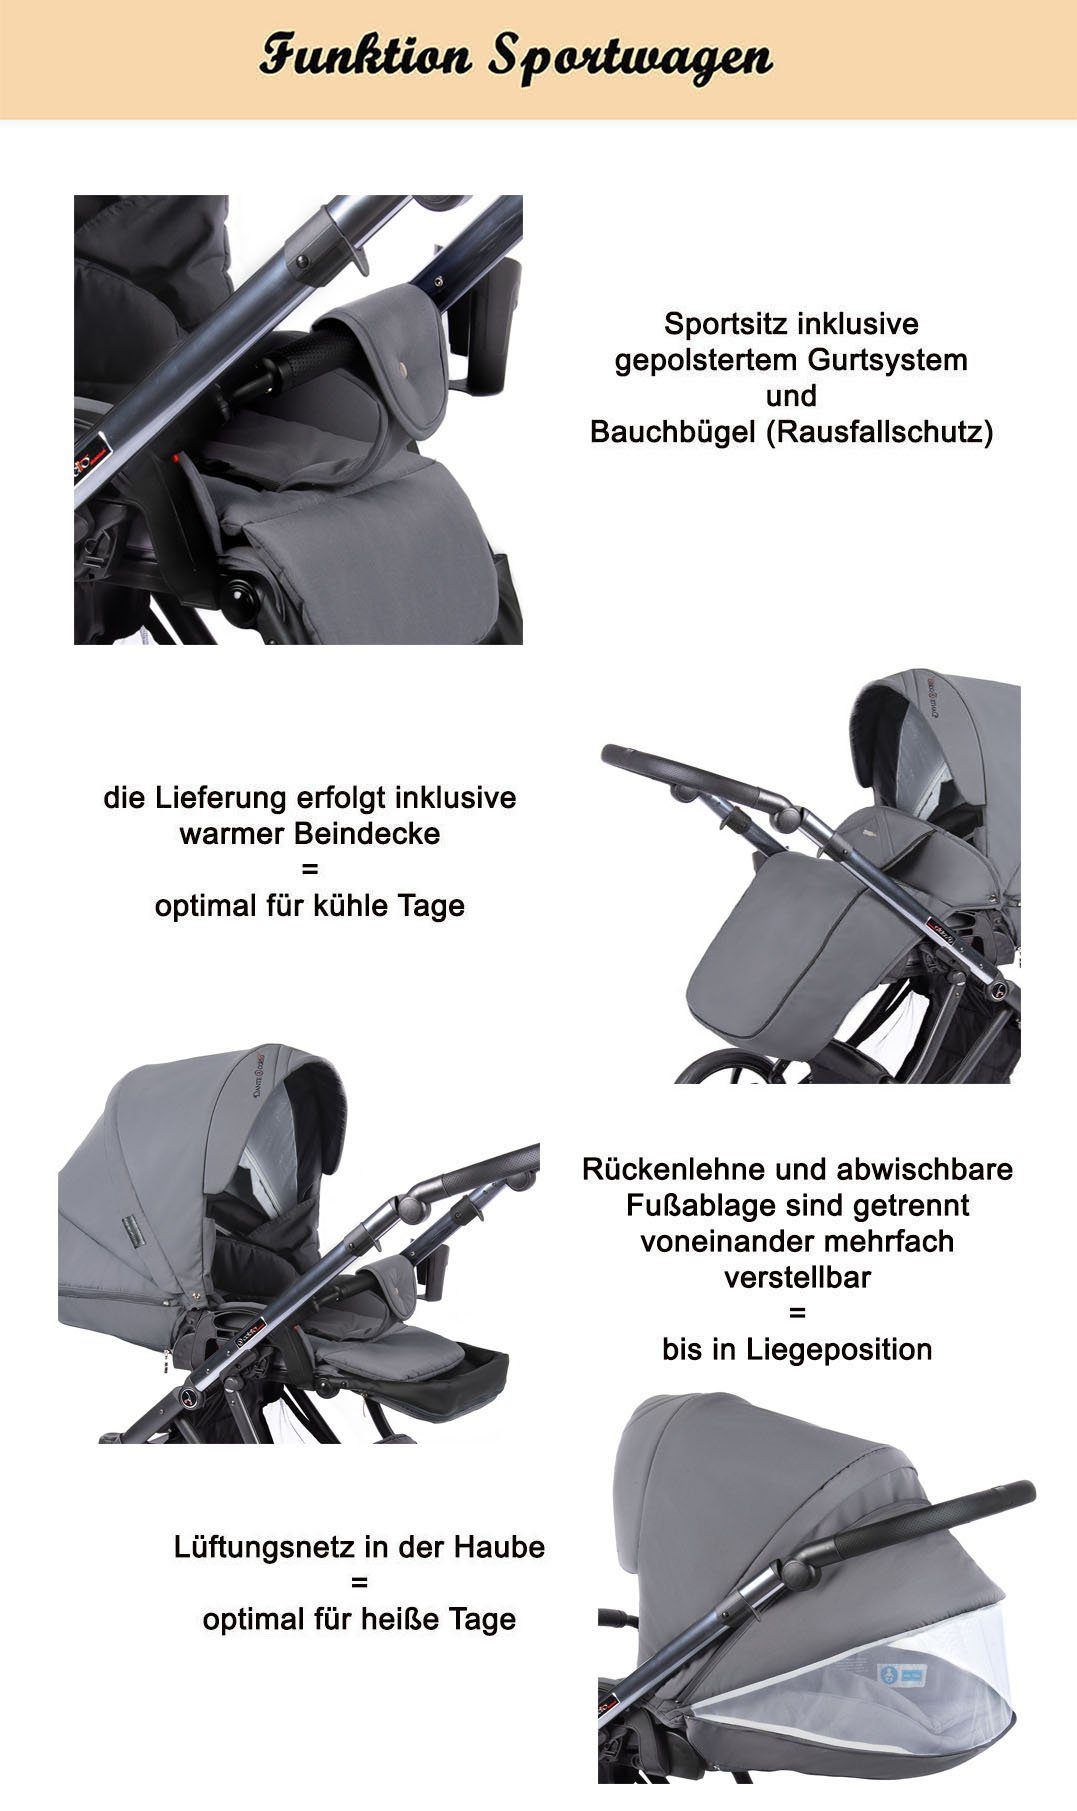 babies-on-wheels Kombi-Kinderwagen in 11 kupfer - Dante 16 1 Gestell Kinderwagen-Set Türkis - = Teile 2 in Farben